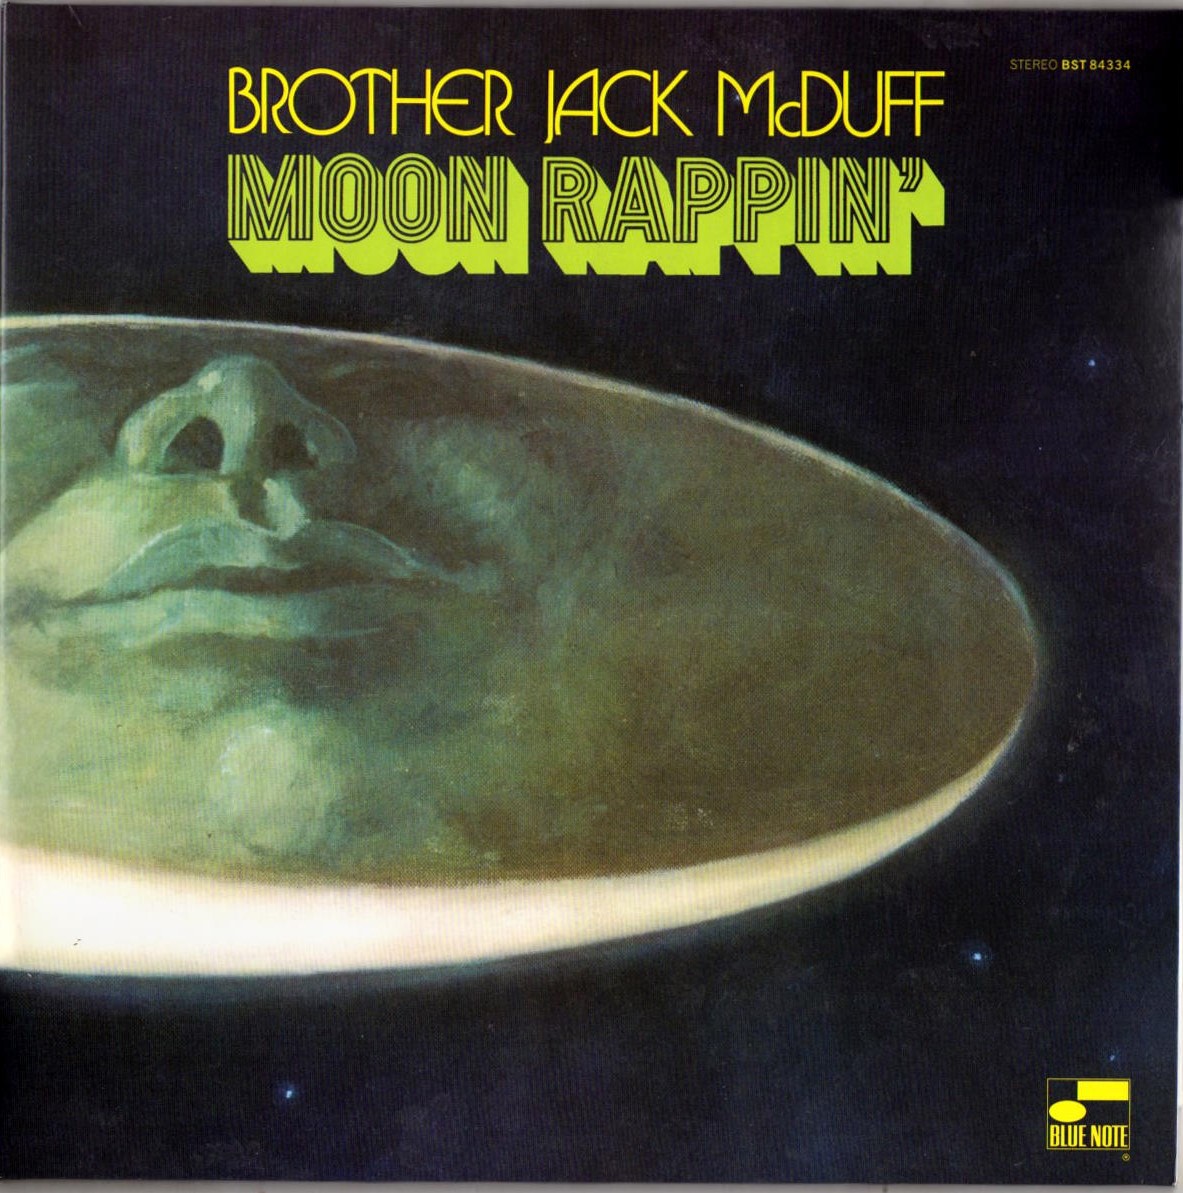 Jack McDuff Jazz/Funk/Psychedelic Organ Classic LP